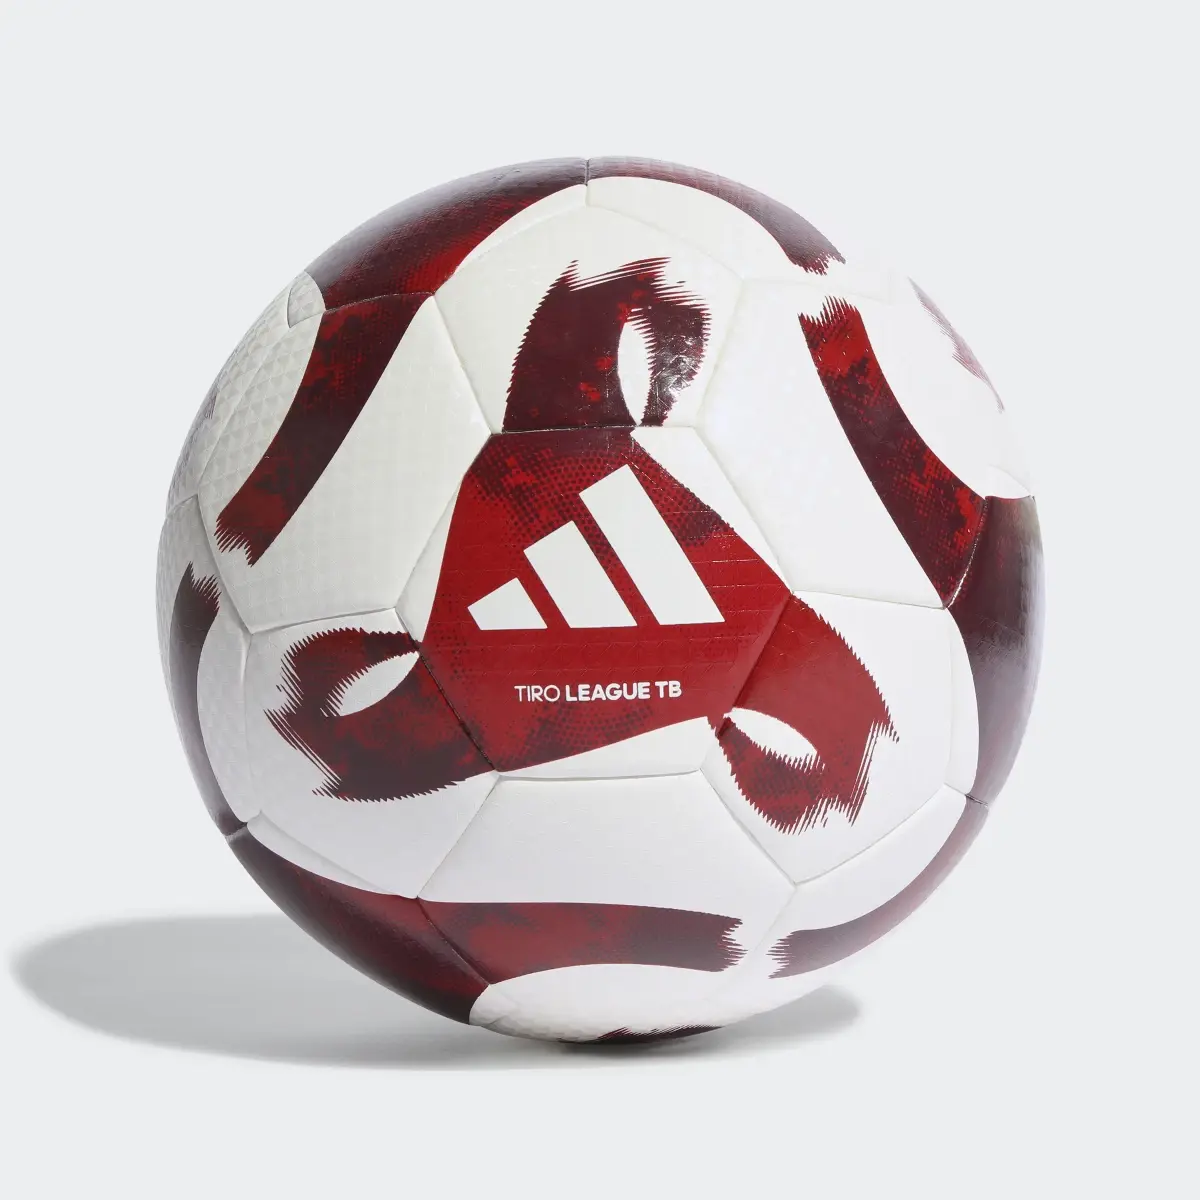 Adidas Tiro League Thermally Bonded Ball. 2